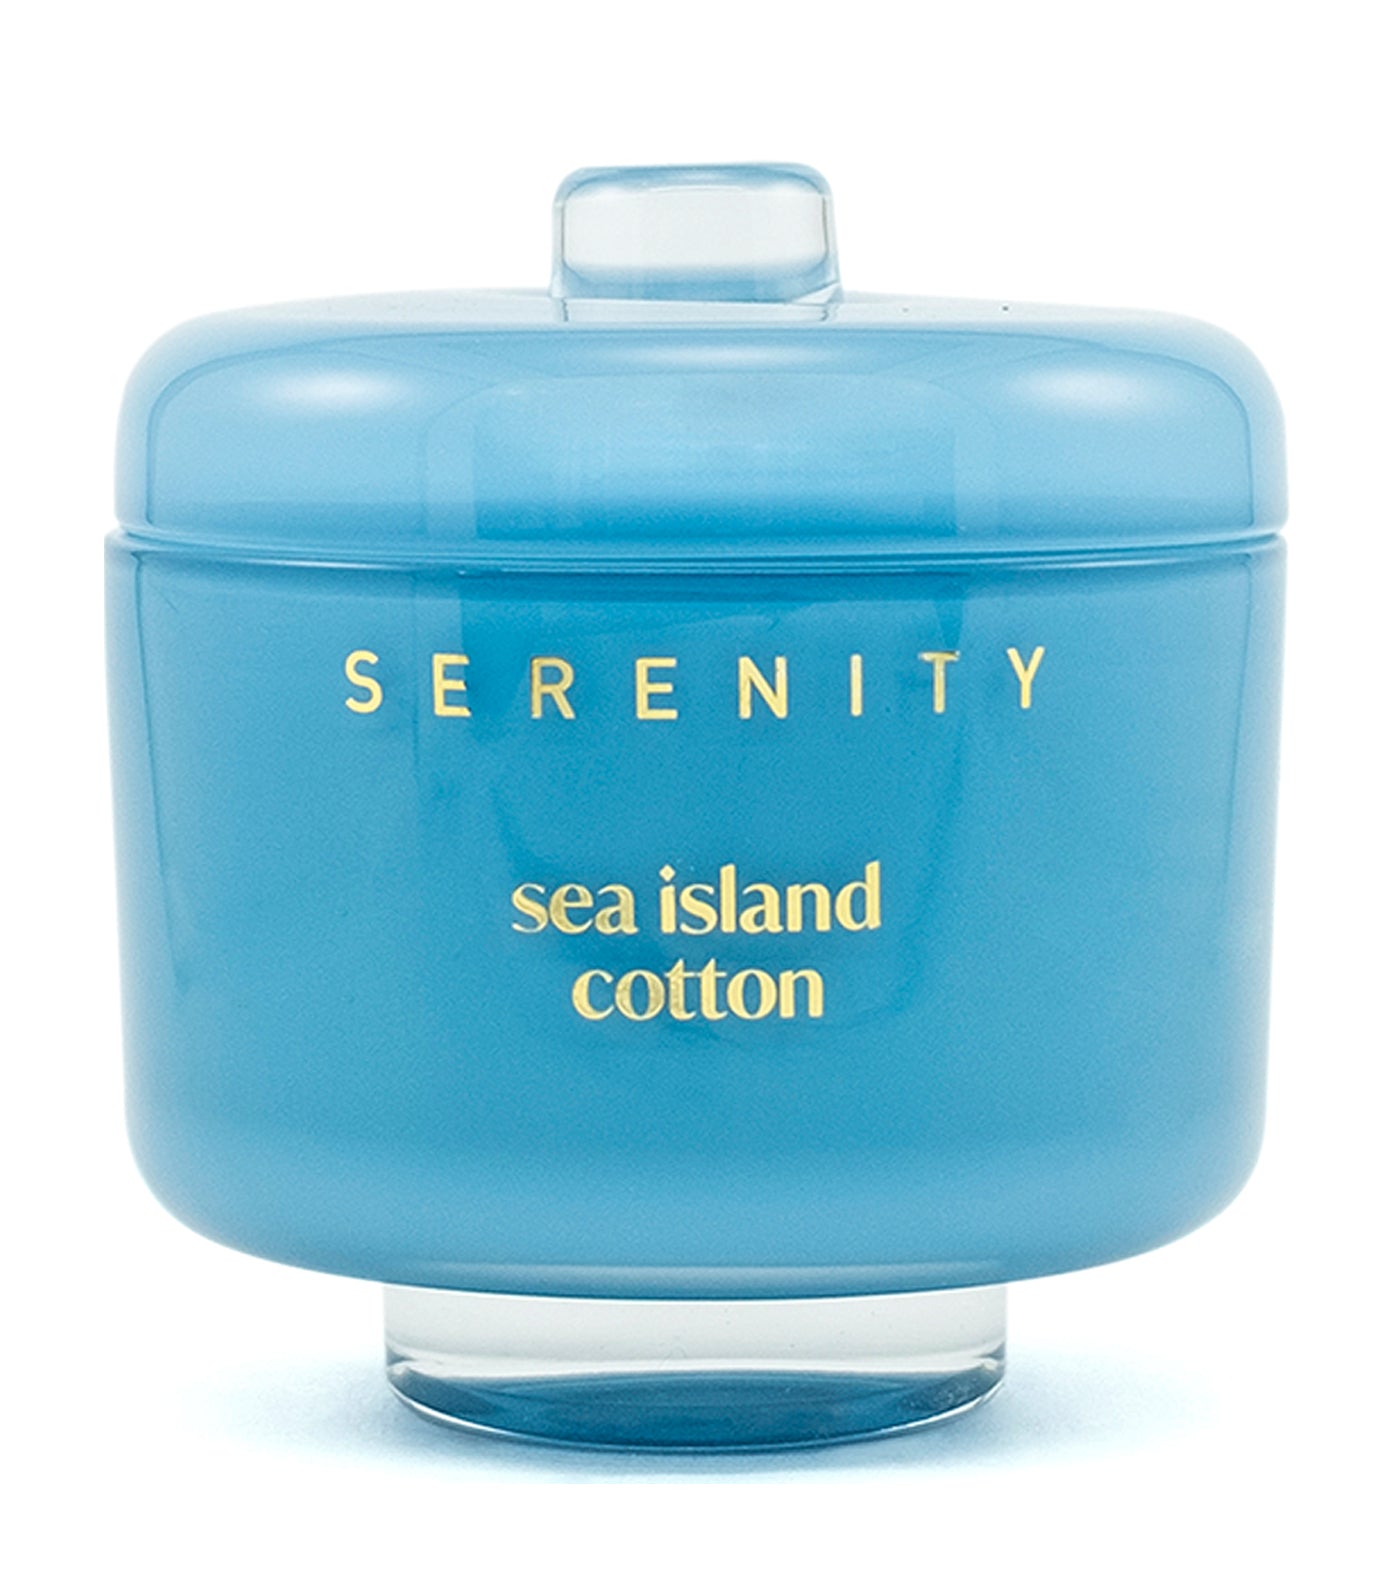 serenity vivid sea island cotton scented candle